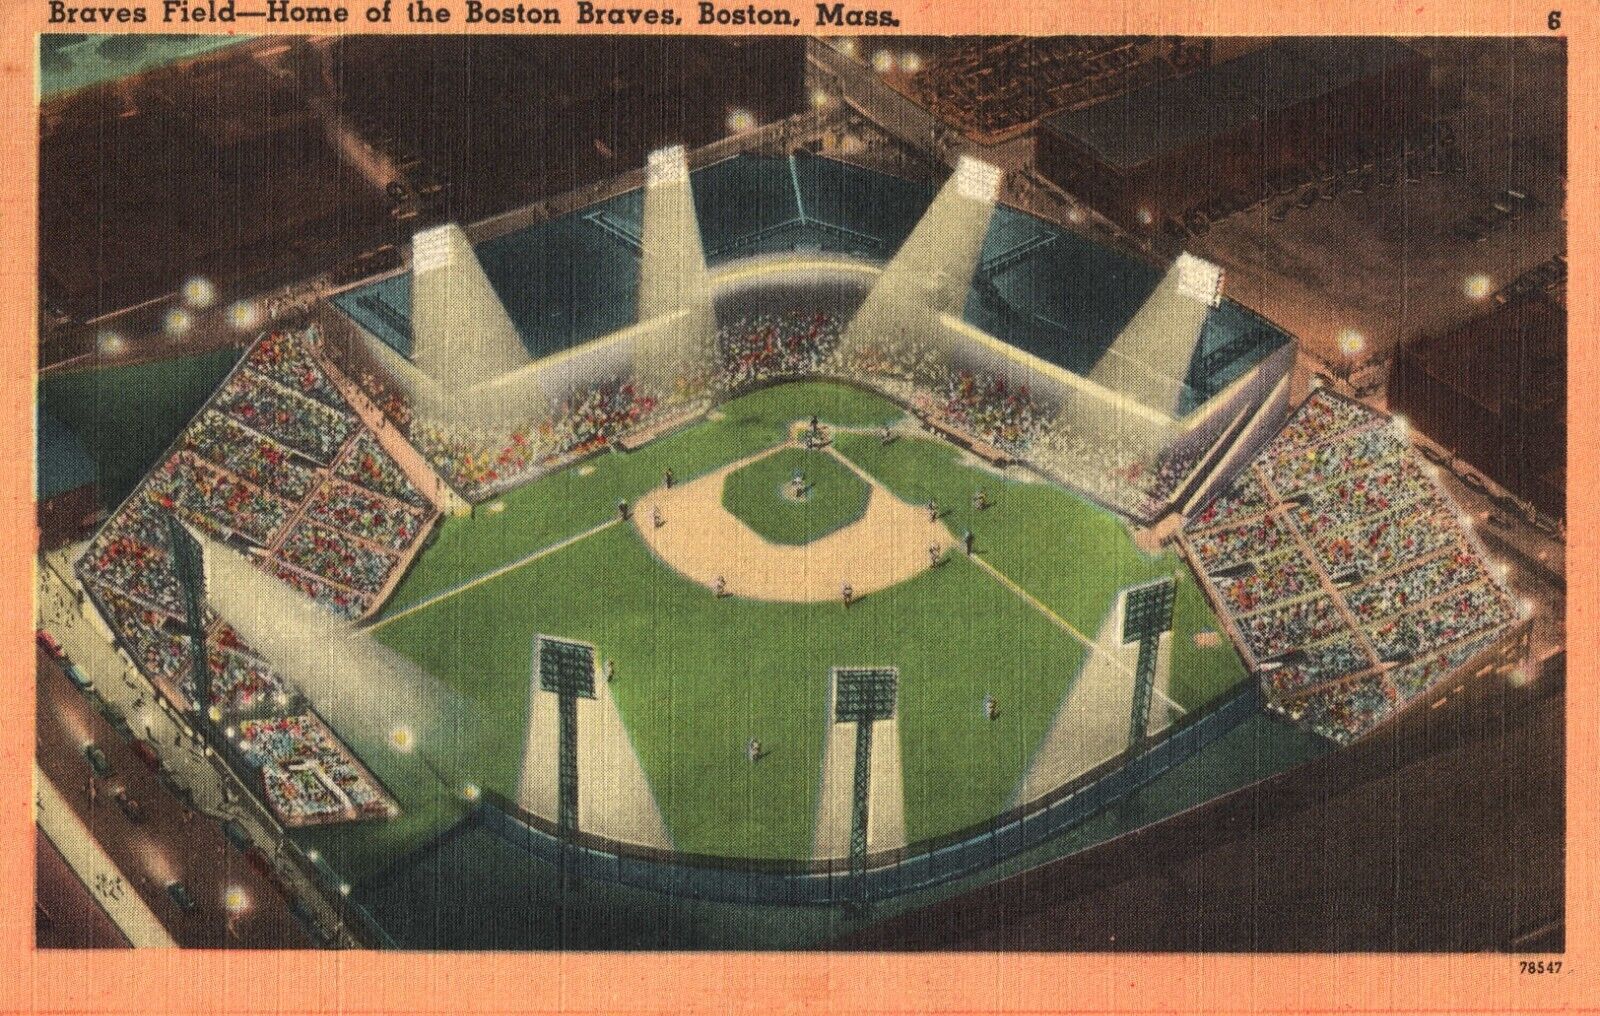 Boston Braves Field Baseball Stadium Night Aerial View Allston MA 1958 Postcard